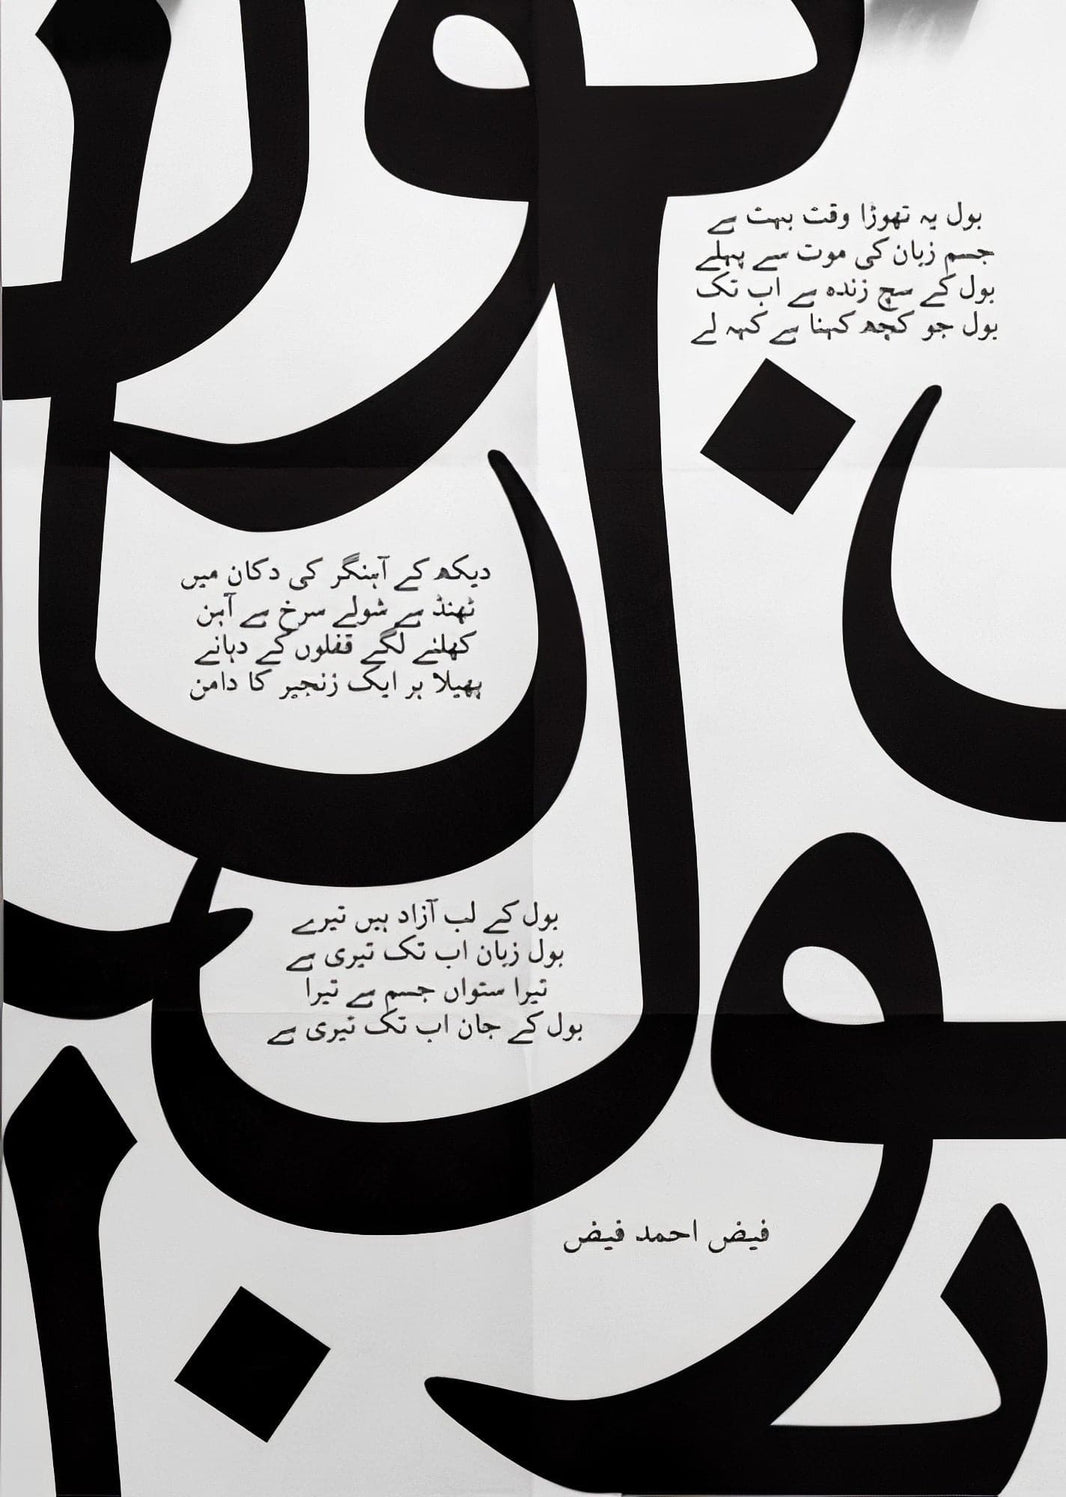 Faiz ahmed faiz poetry